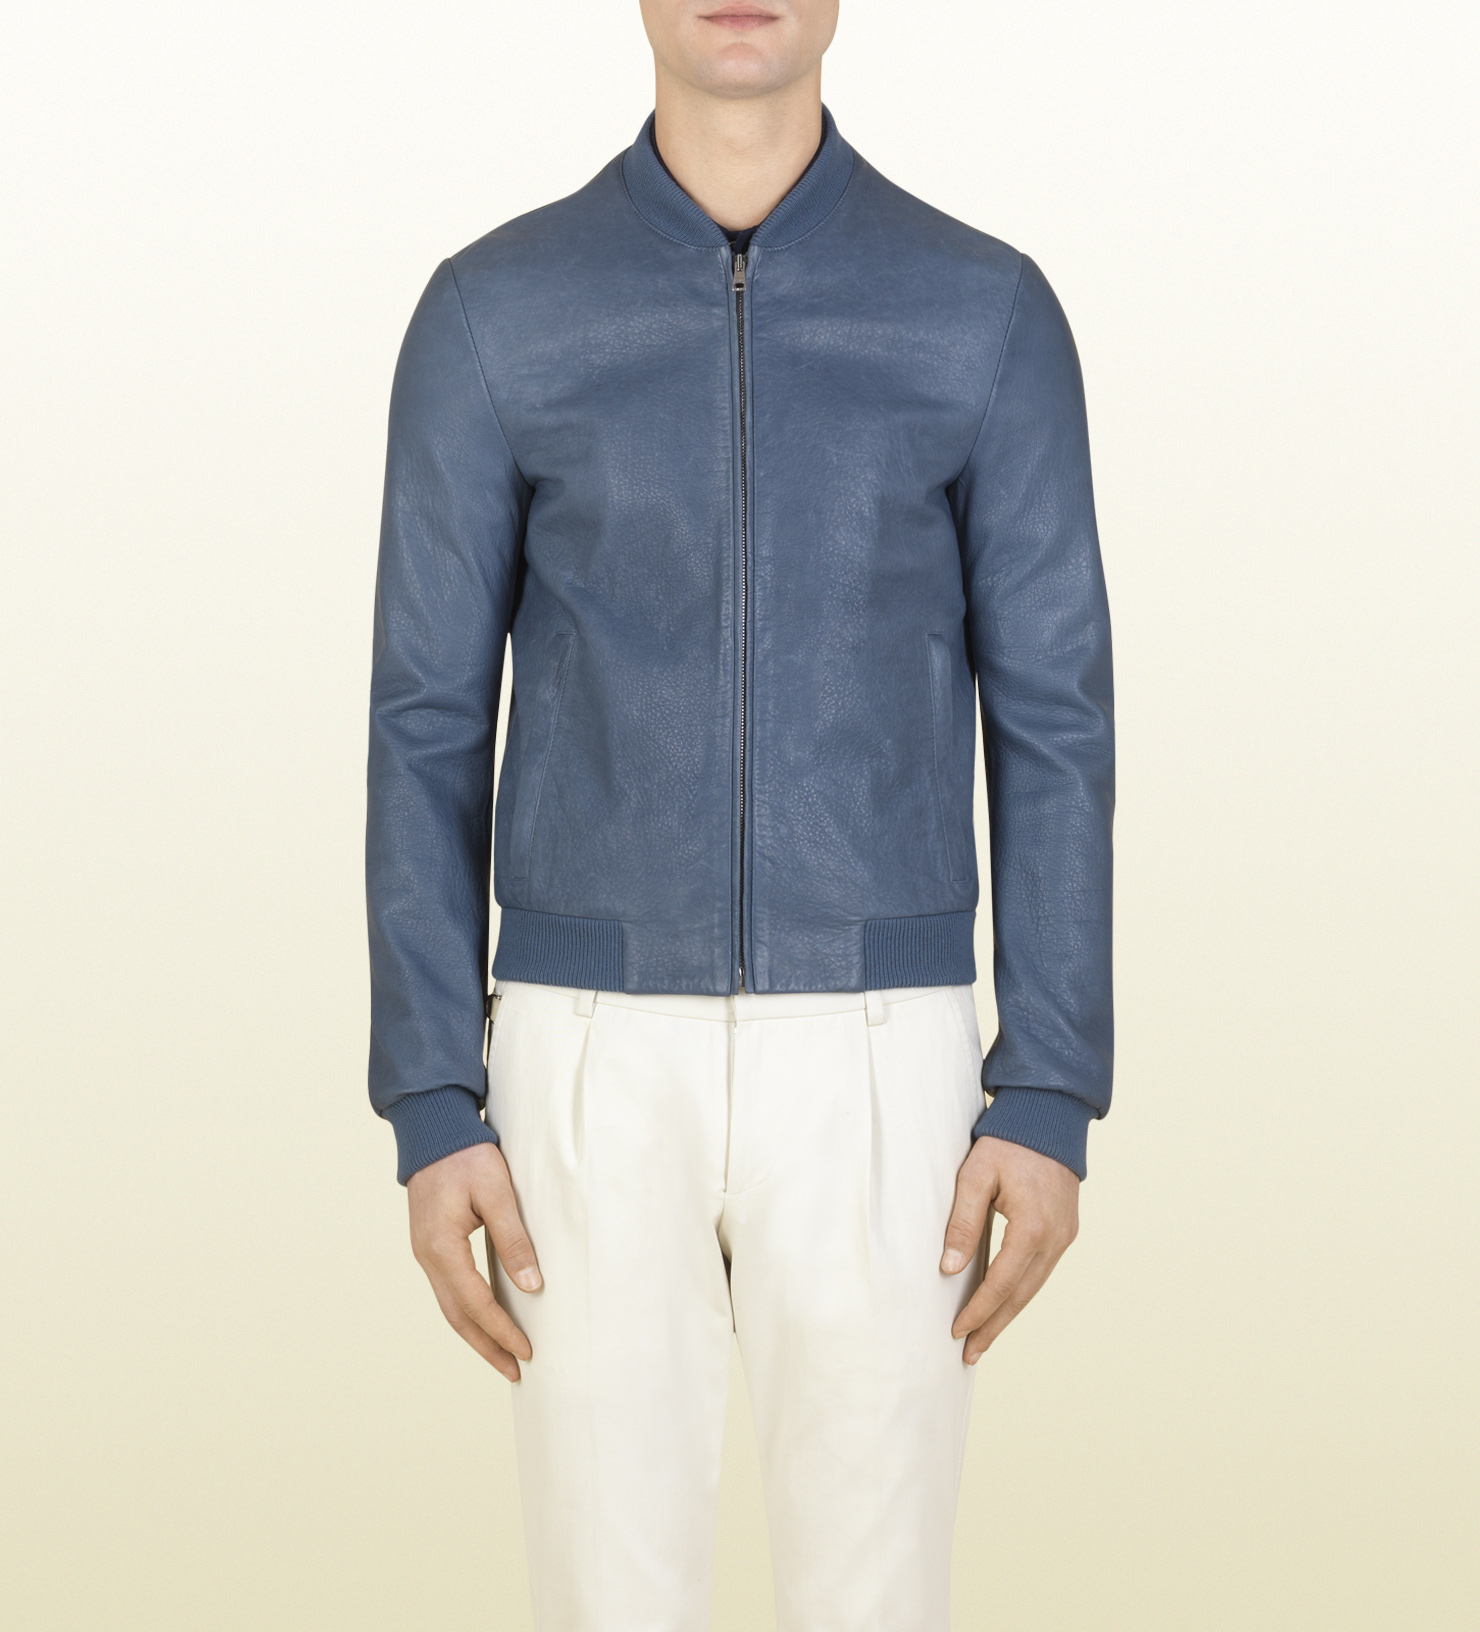 gucci blue leather jacket, OFF 72%,www 